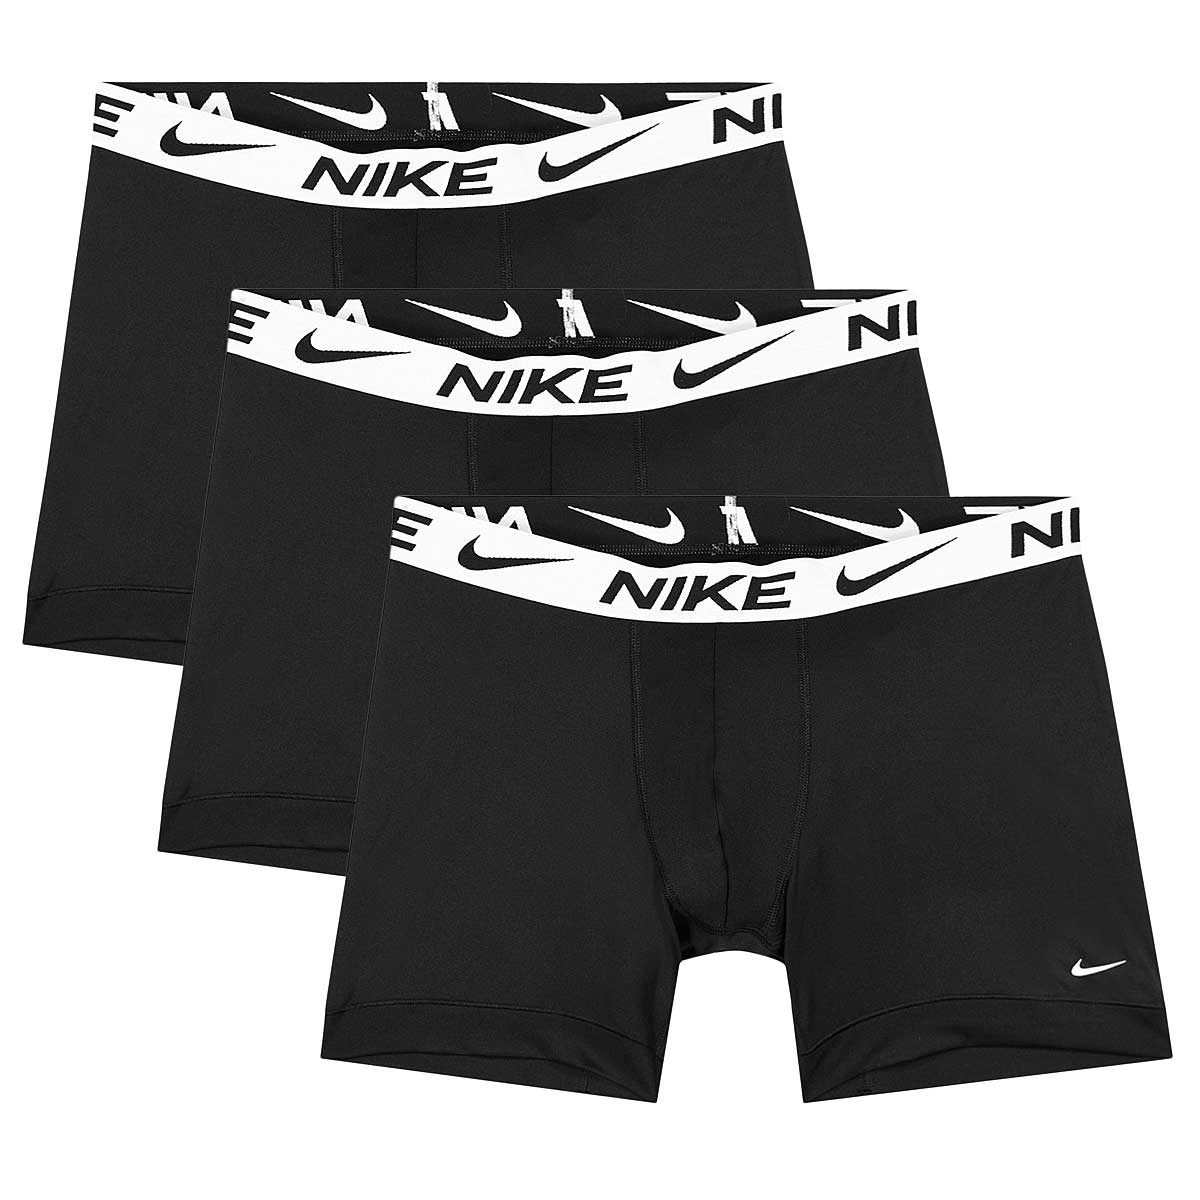 Image of Nike Boxer Brief 3pk, Silver/black